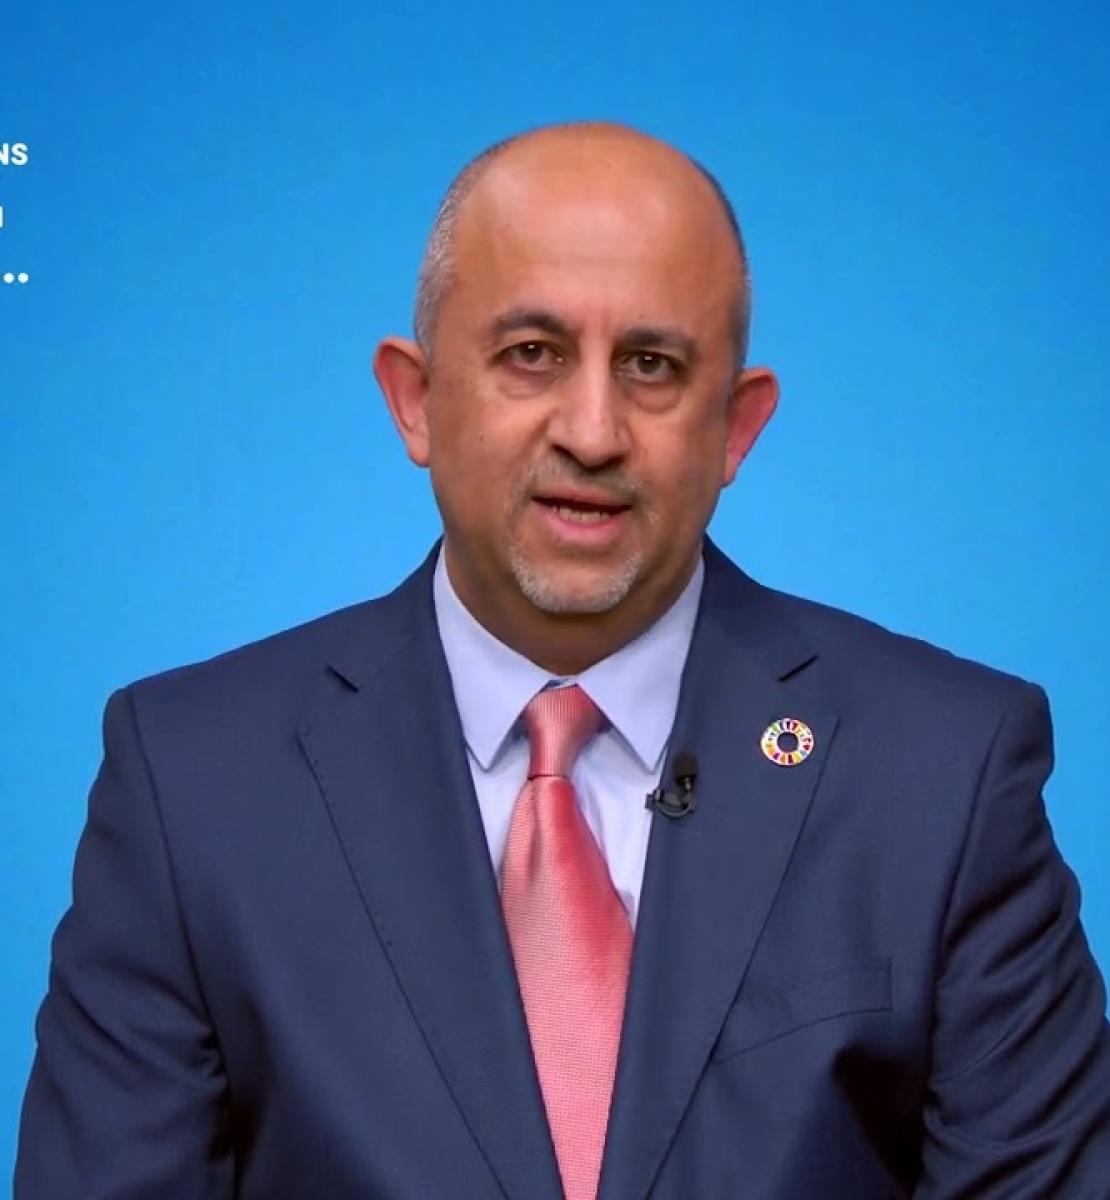 Screenshot from video message shows Resident Coordinator, Khaled El Mekwad